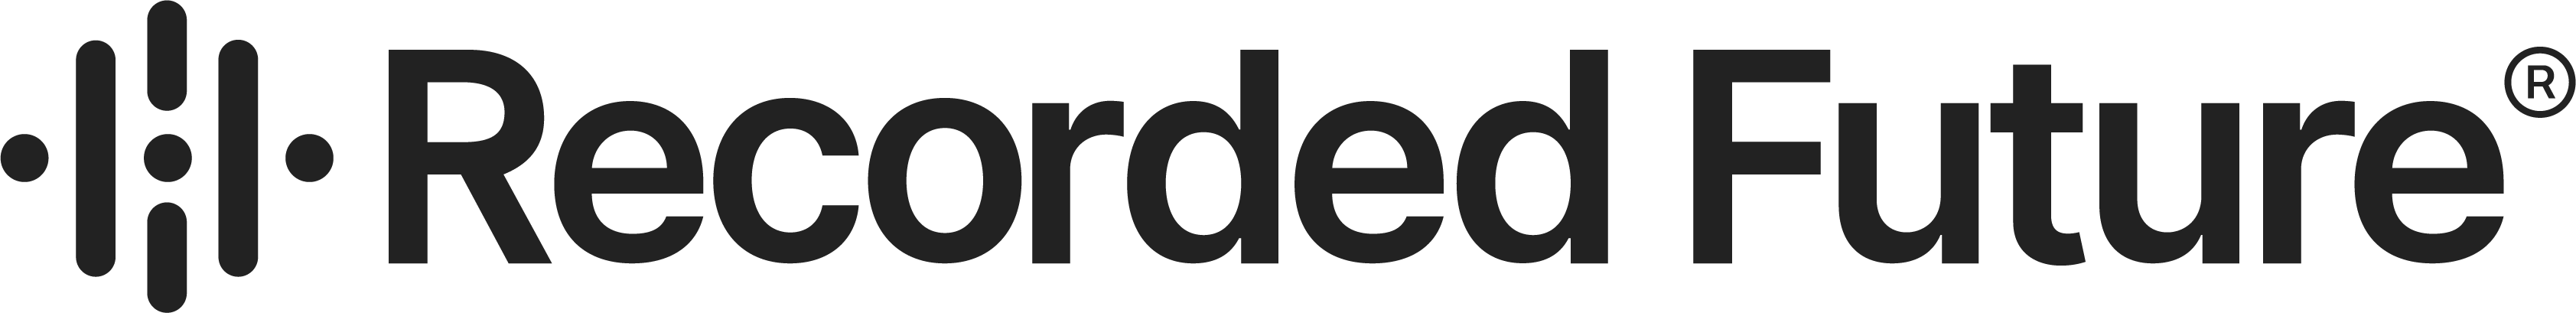 Primary Logo - Digital